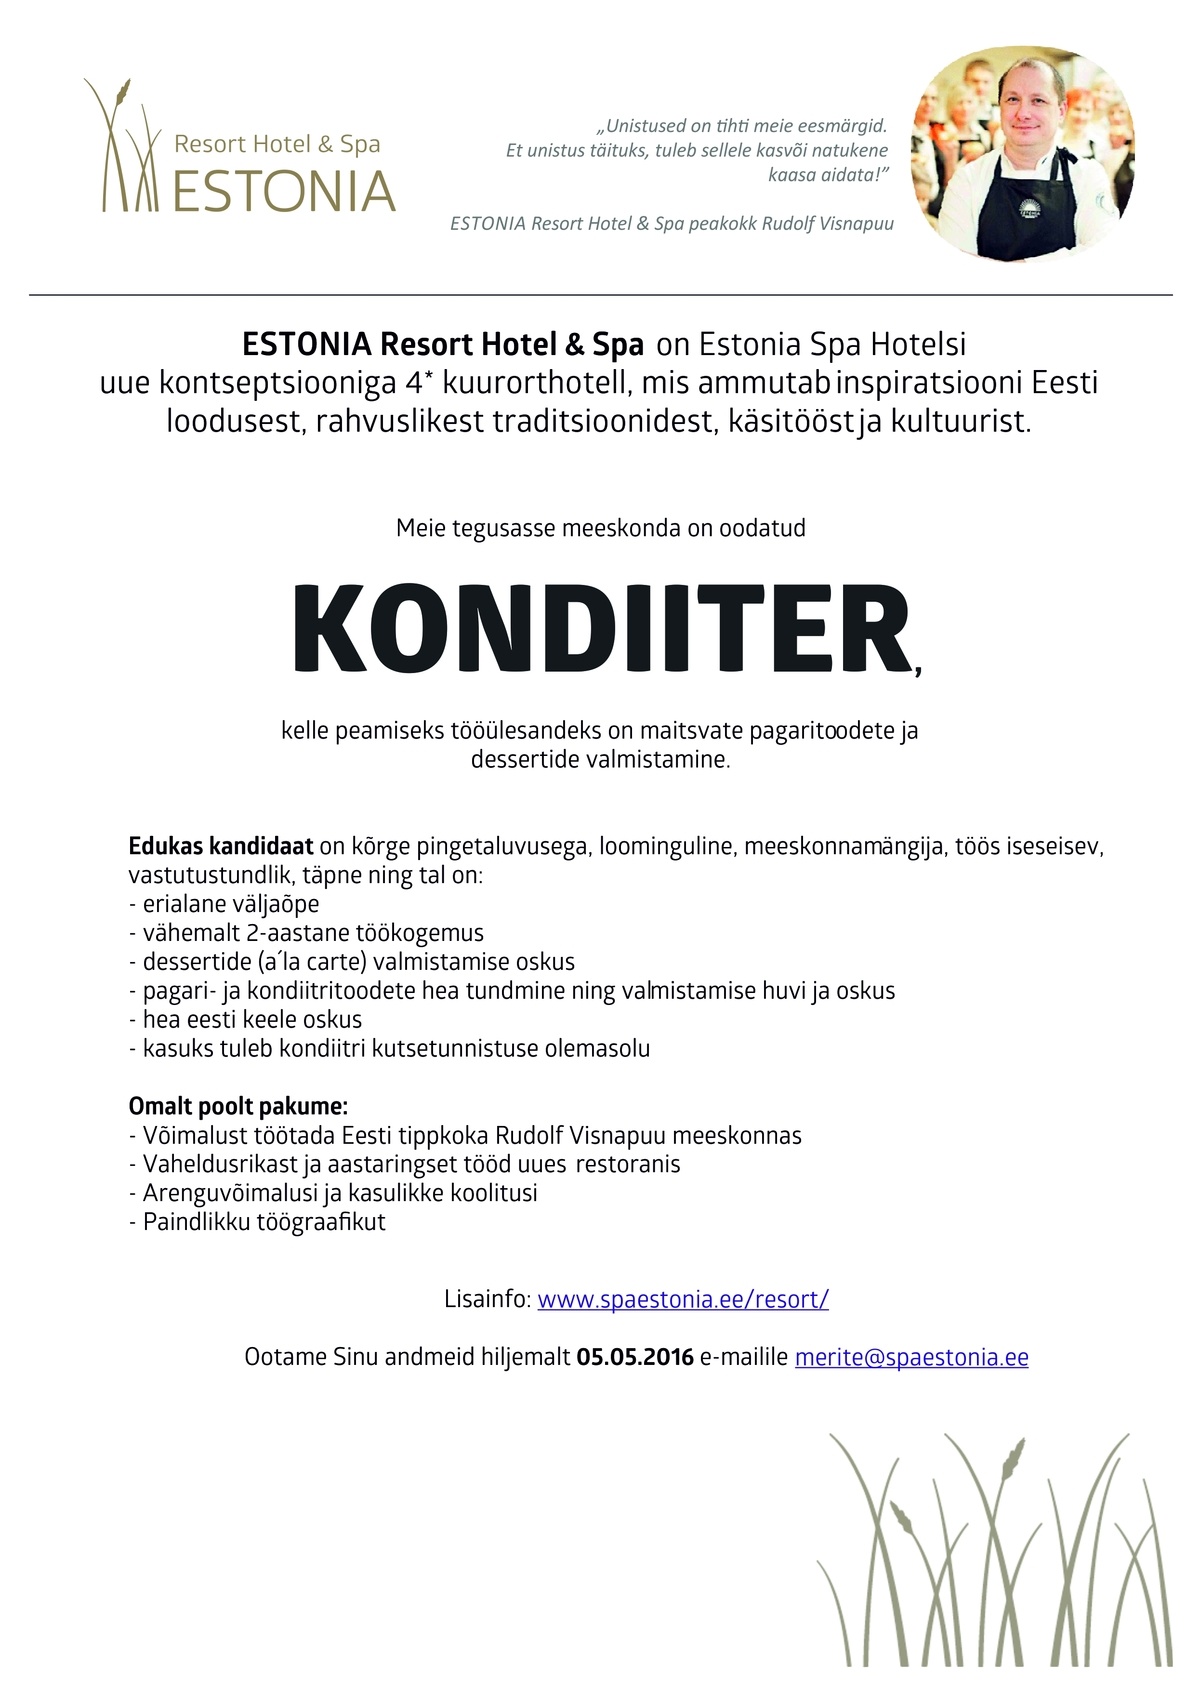 Estonia Spa Hotels AS Kondiiter